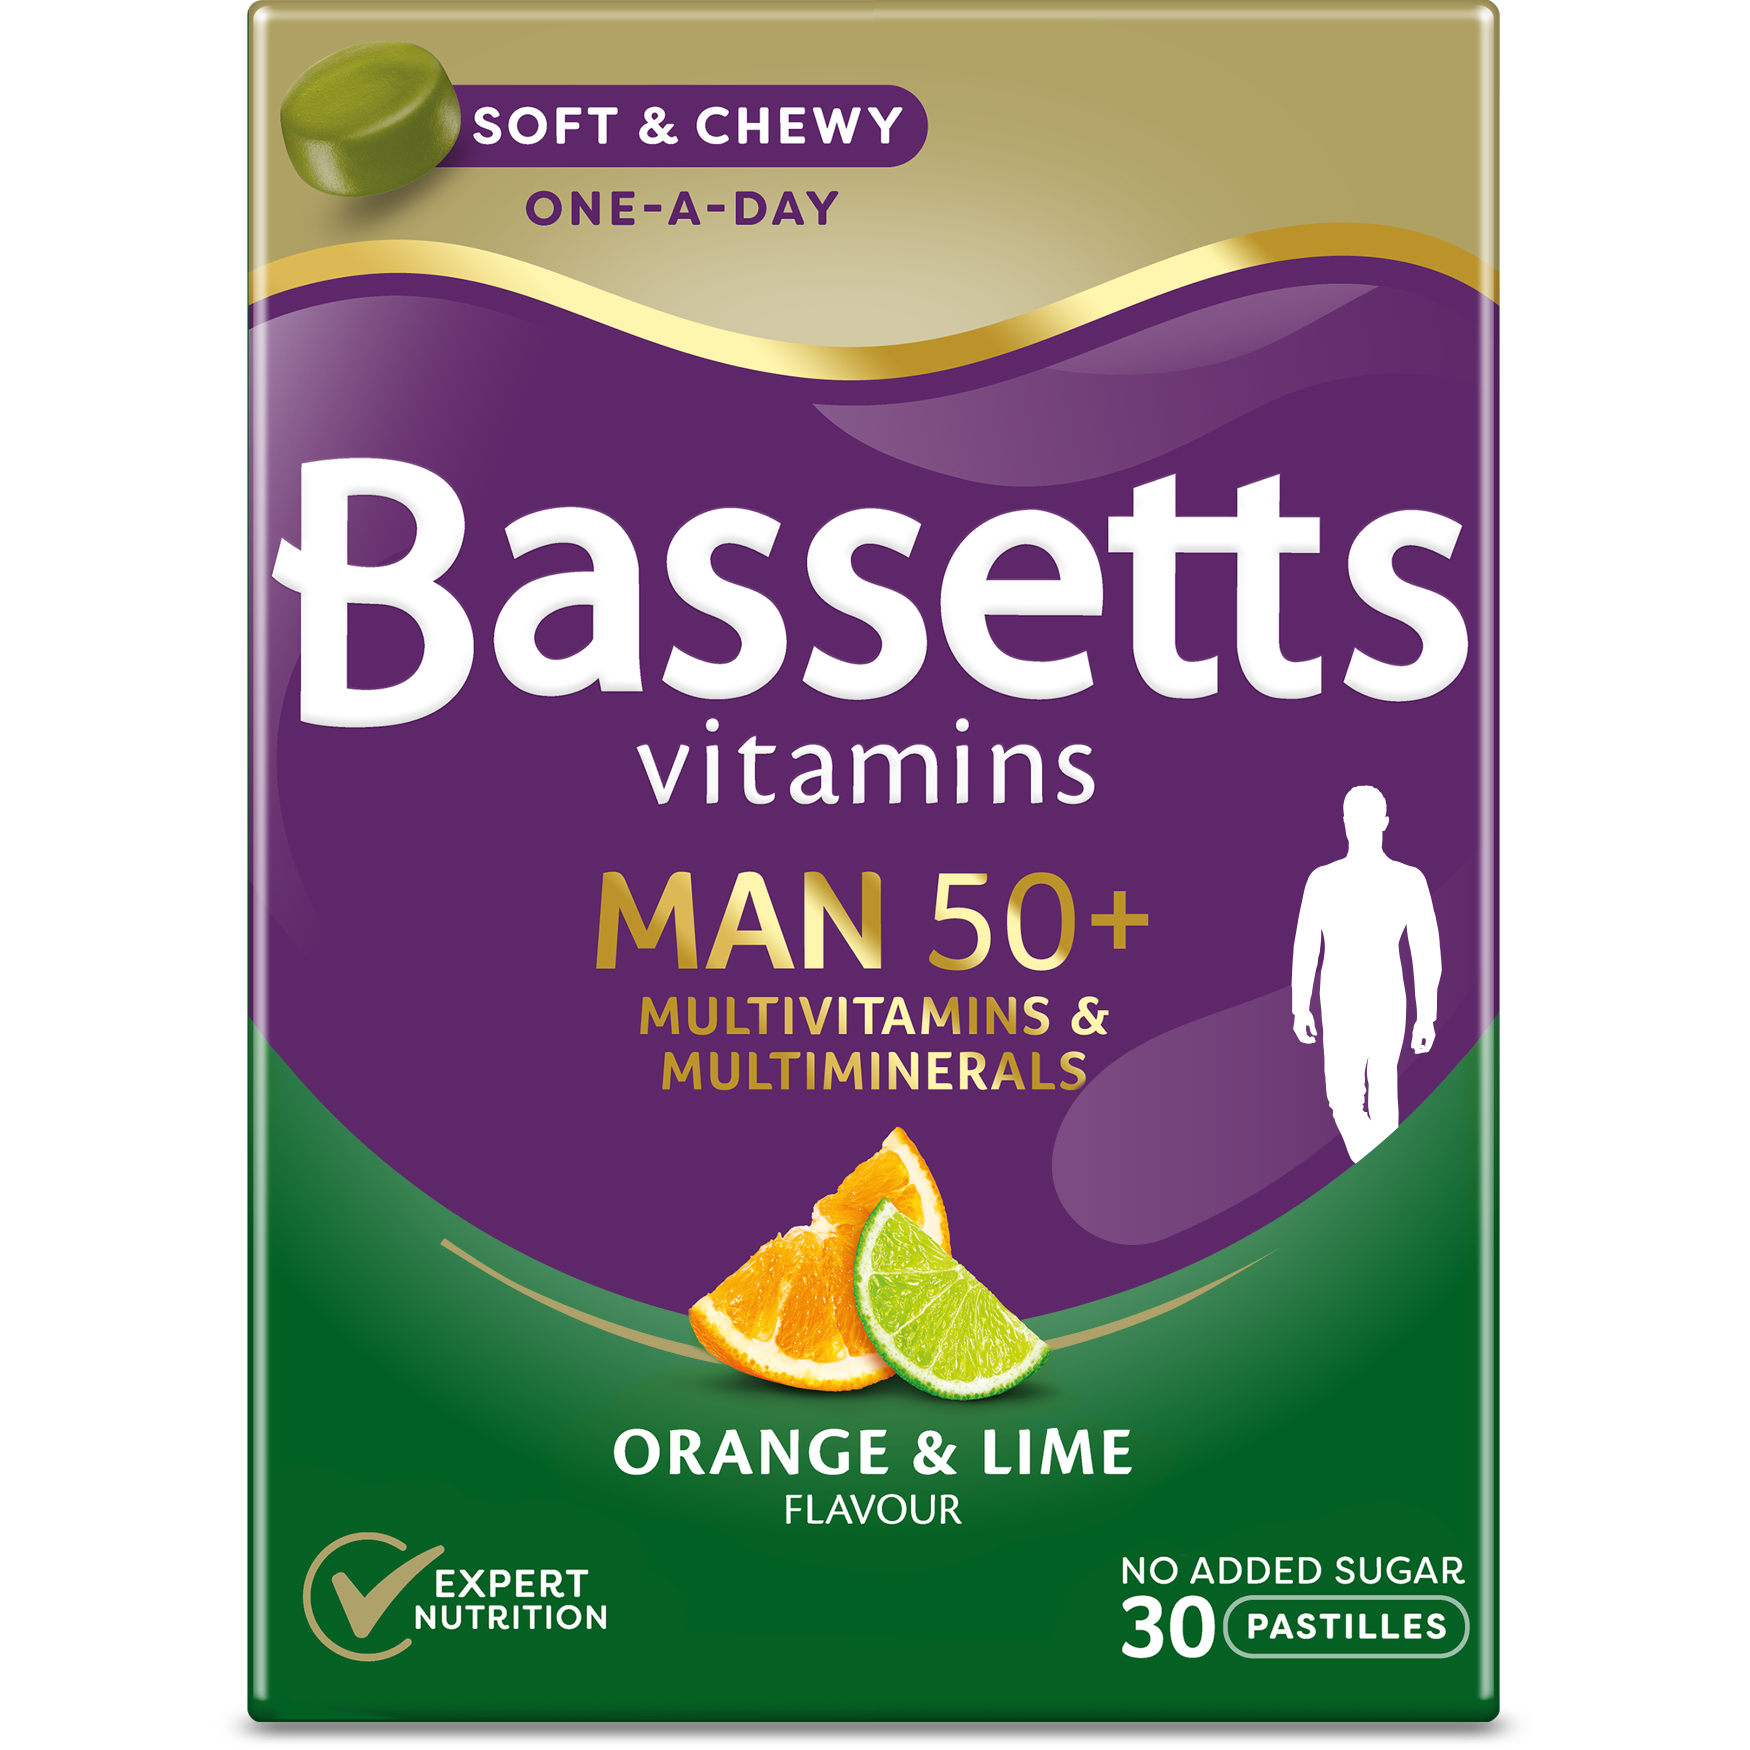 Bassetts Vitamins set to shake up adult vitamins category